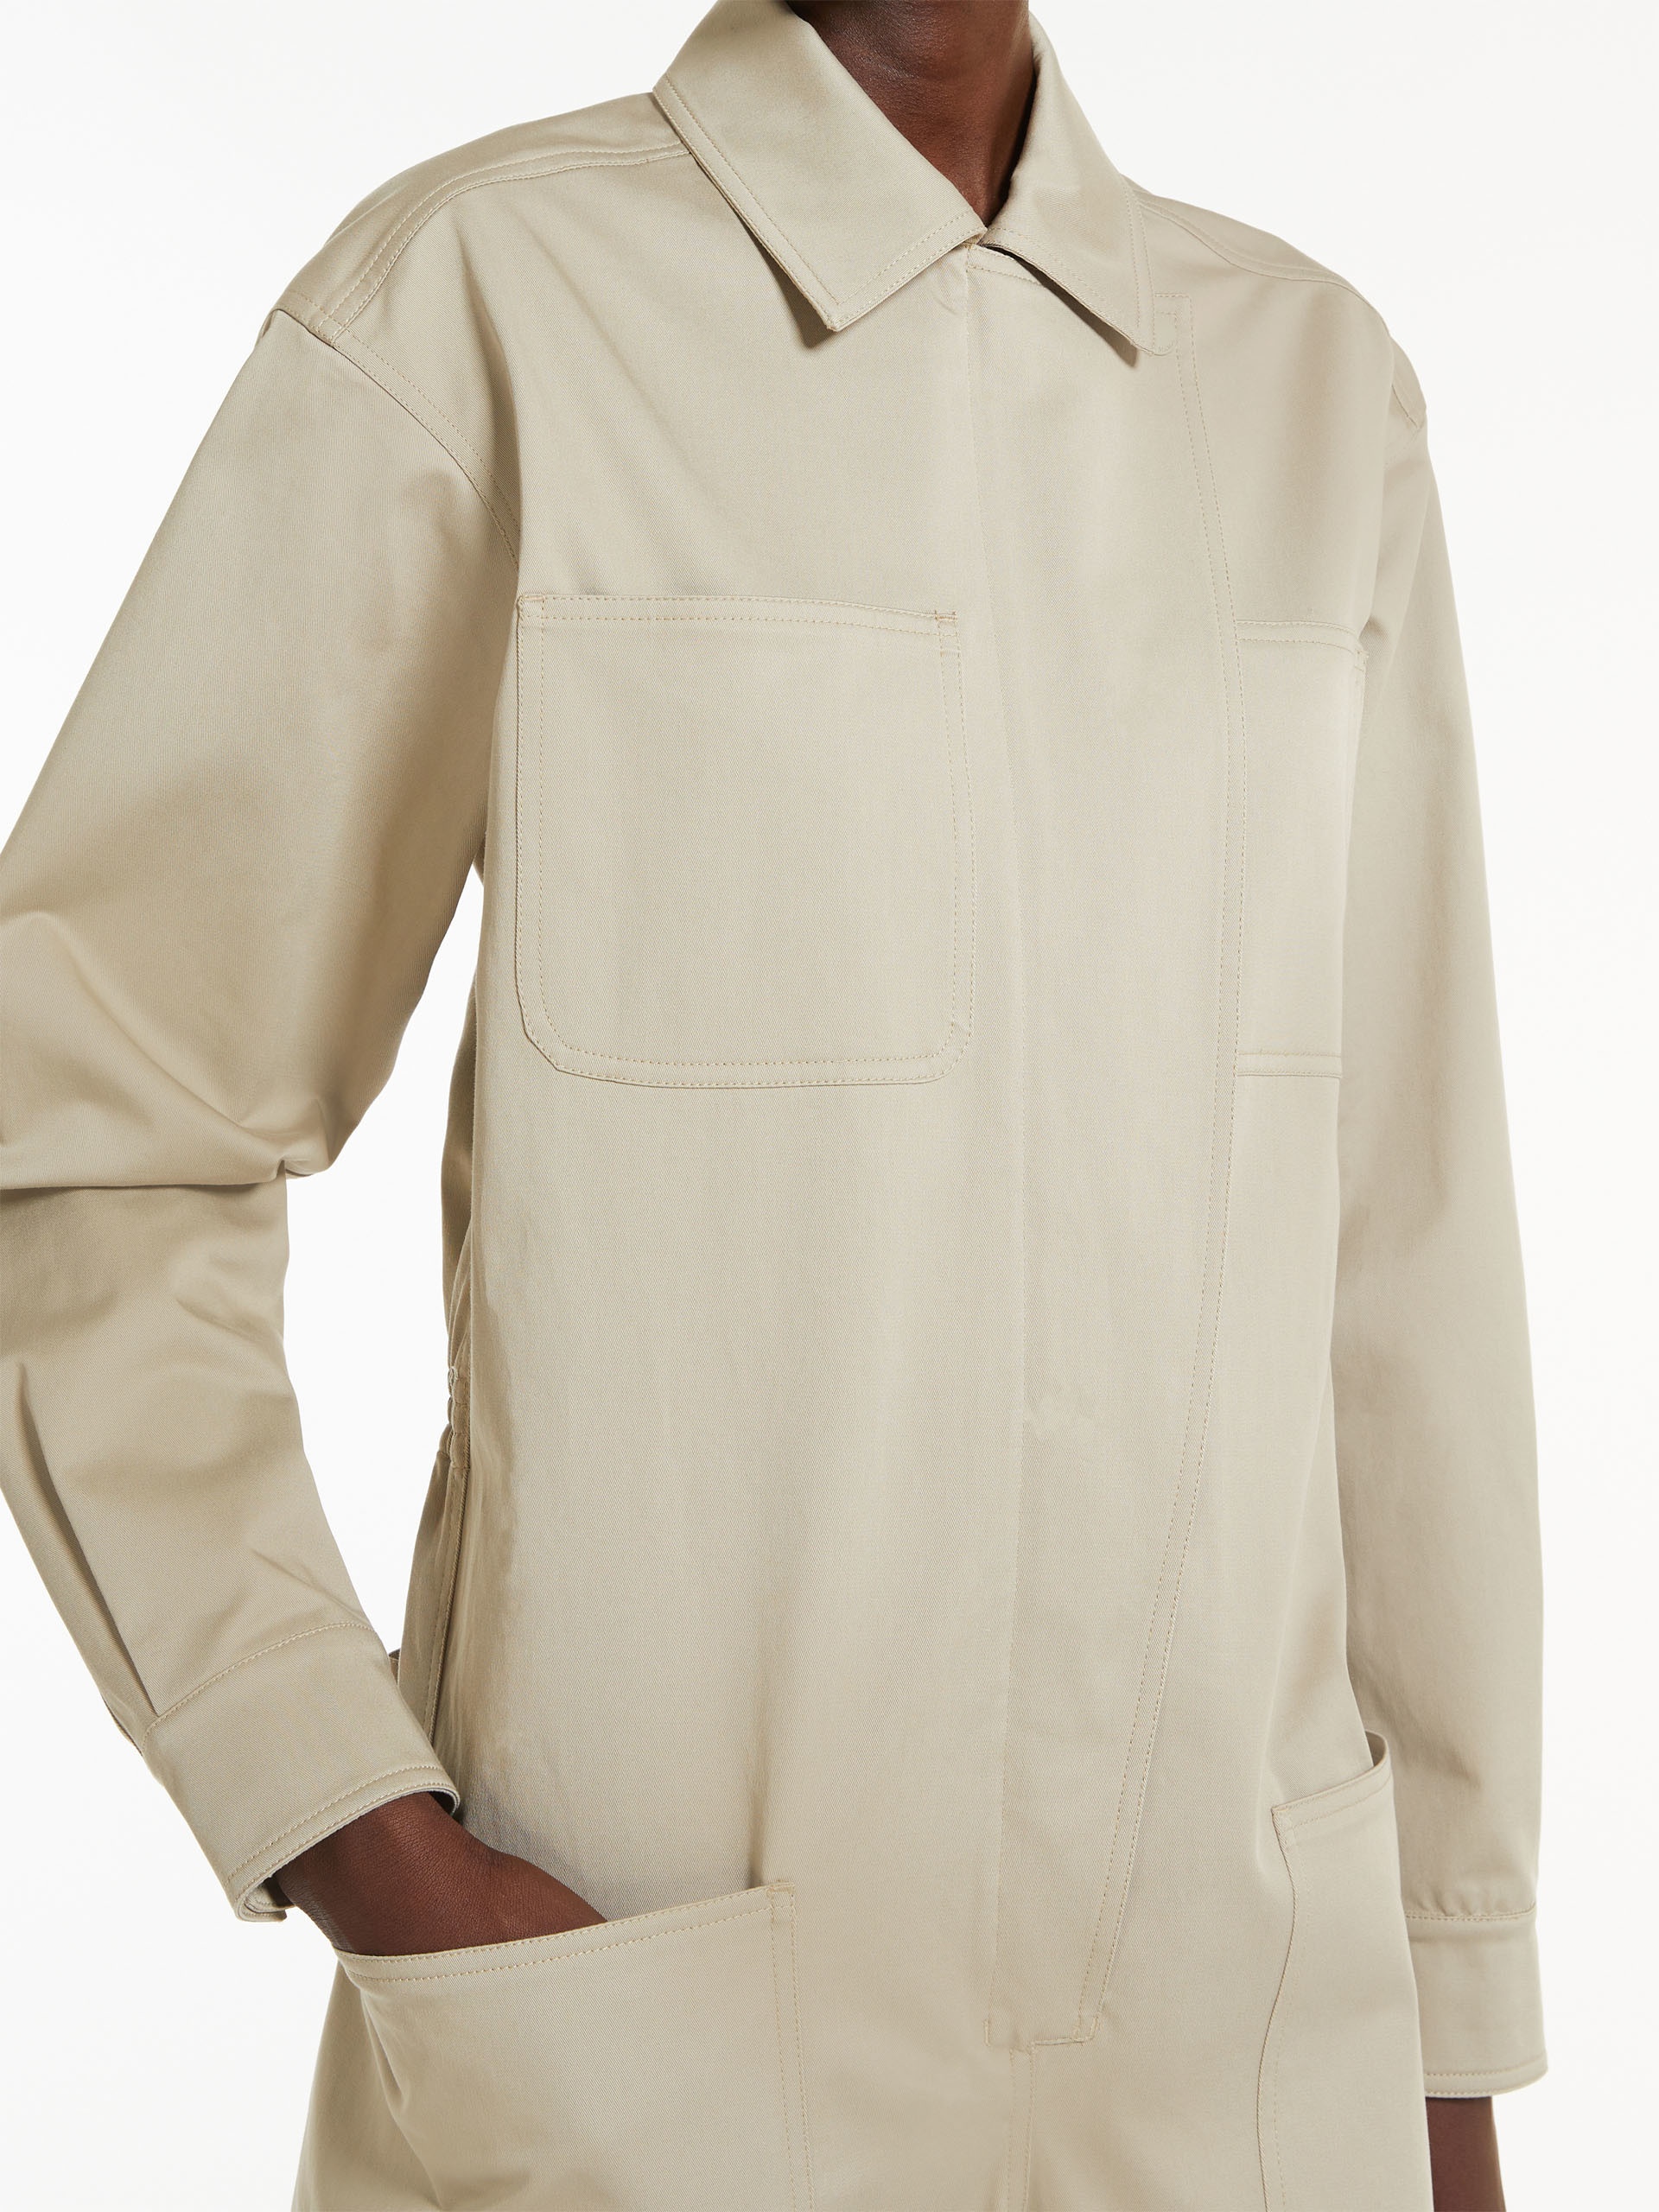 CARAIBI Stretch cotton workwear jumpsuit - 5